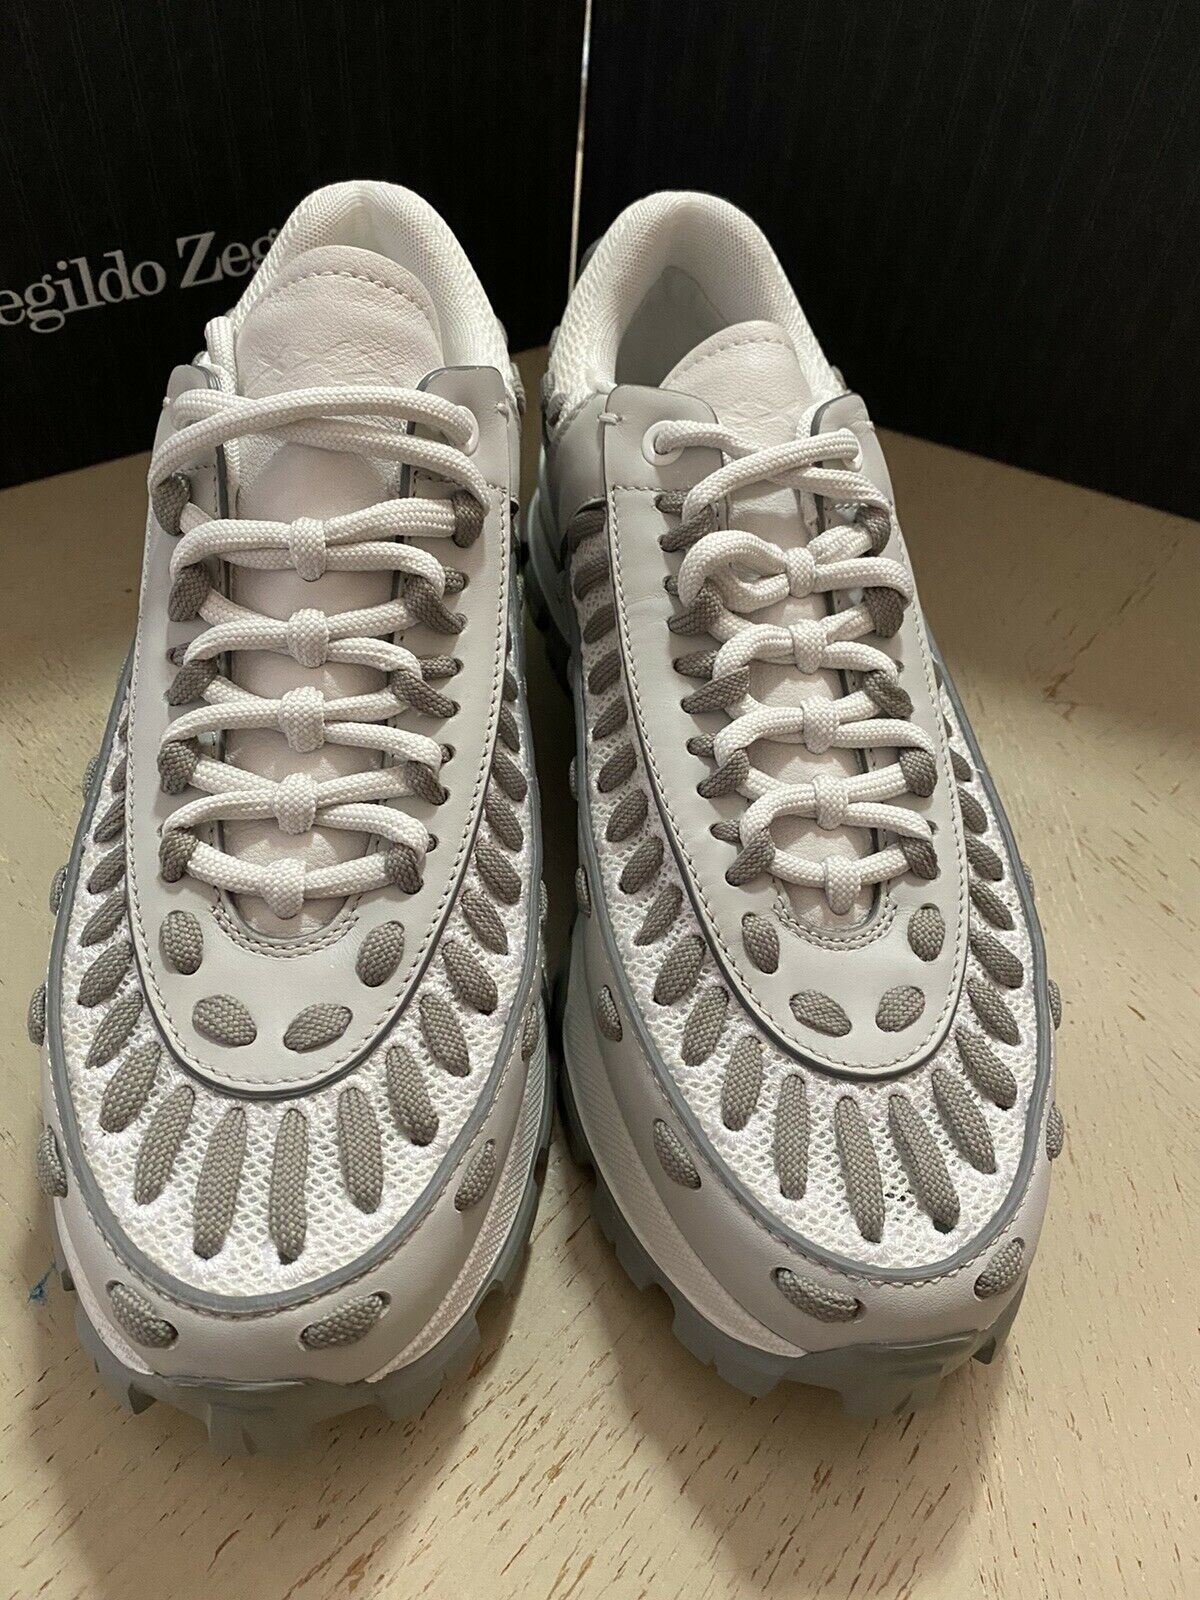 New $795 Ermenegildo Zegna Couture Leather Sneakers Shoes White/Gray 8.5 US Ita